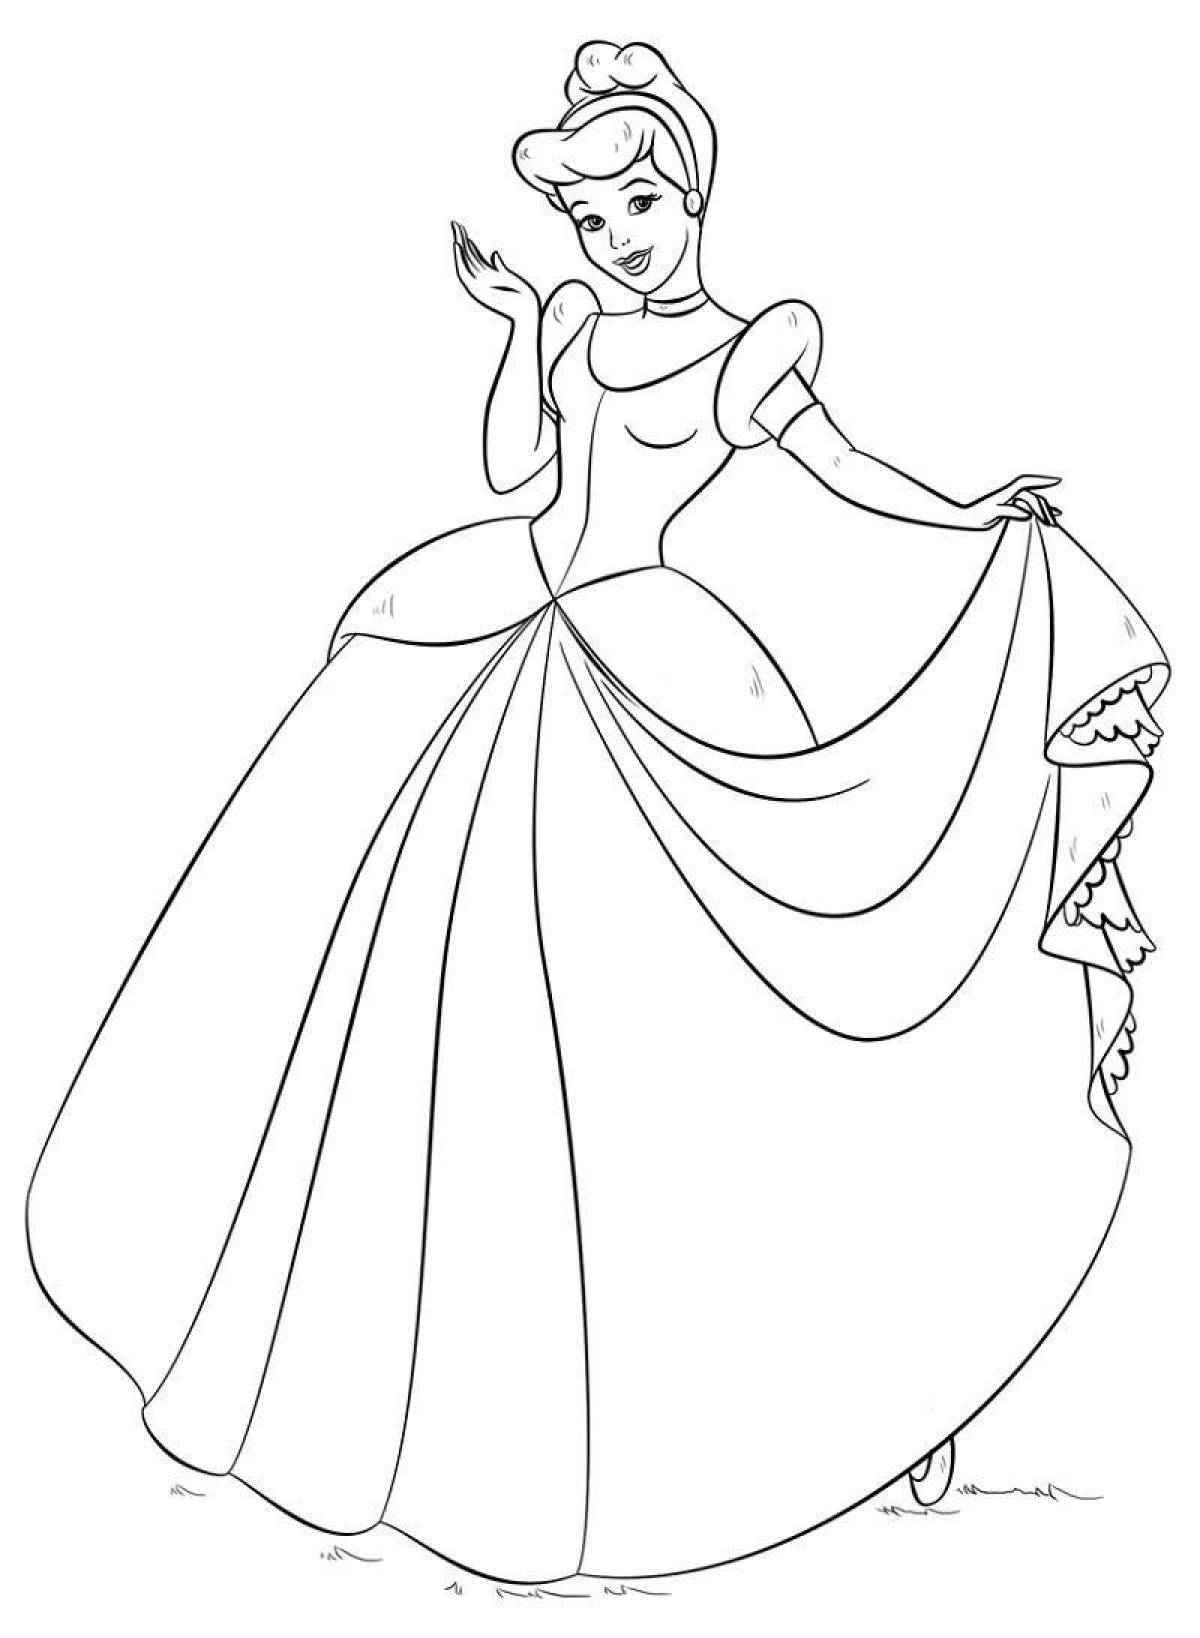 Disney's elegant Cinderella coloring book